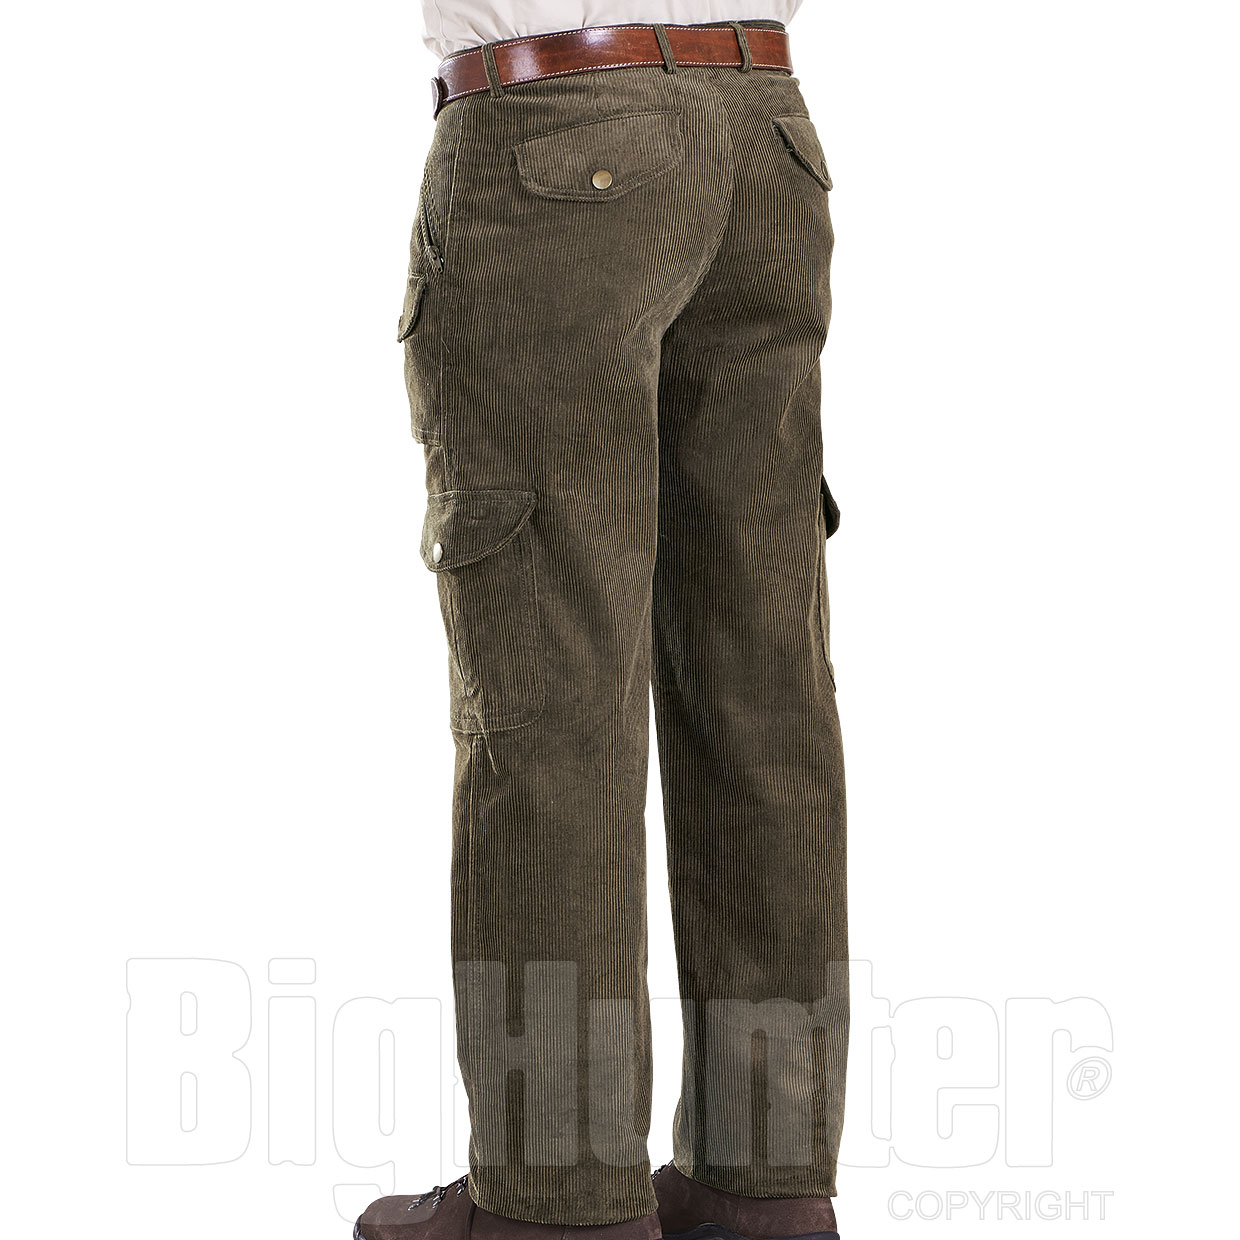 Caccia-Lederhose pantaloni pantaloni forestale Cargo-Lederhose 1504 caccia NABUK-in pelle verde oliva 